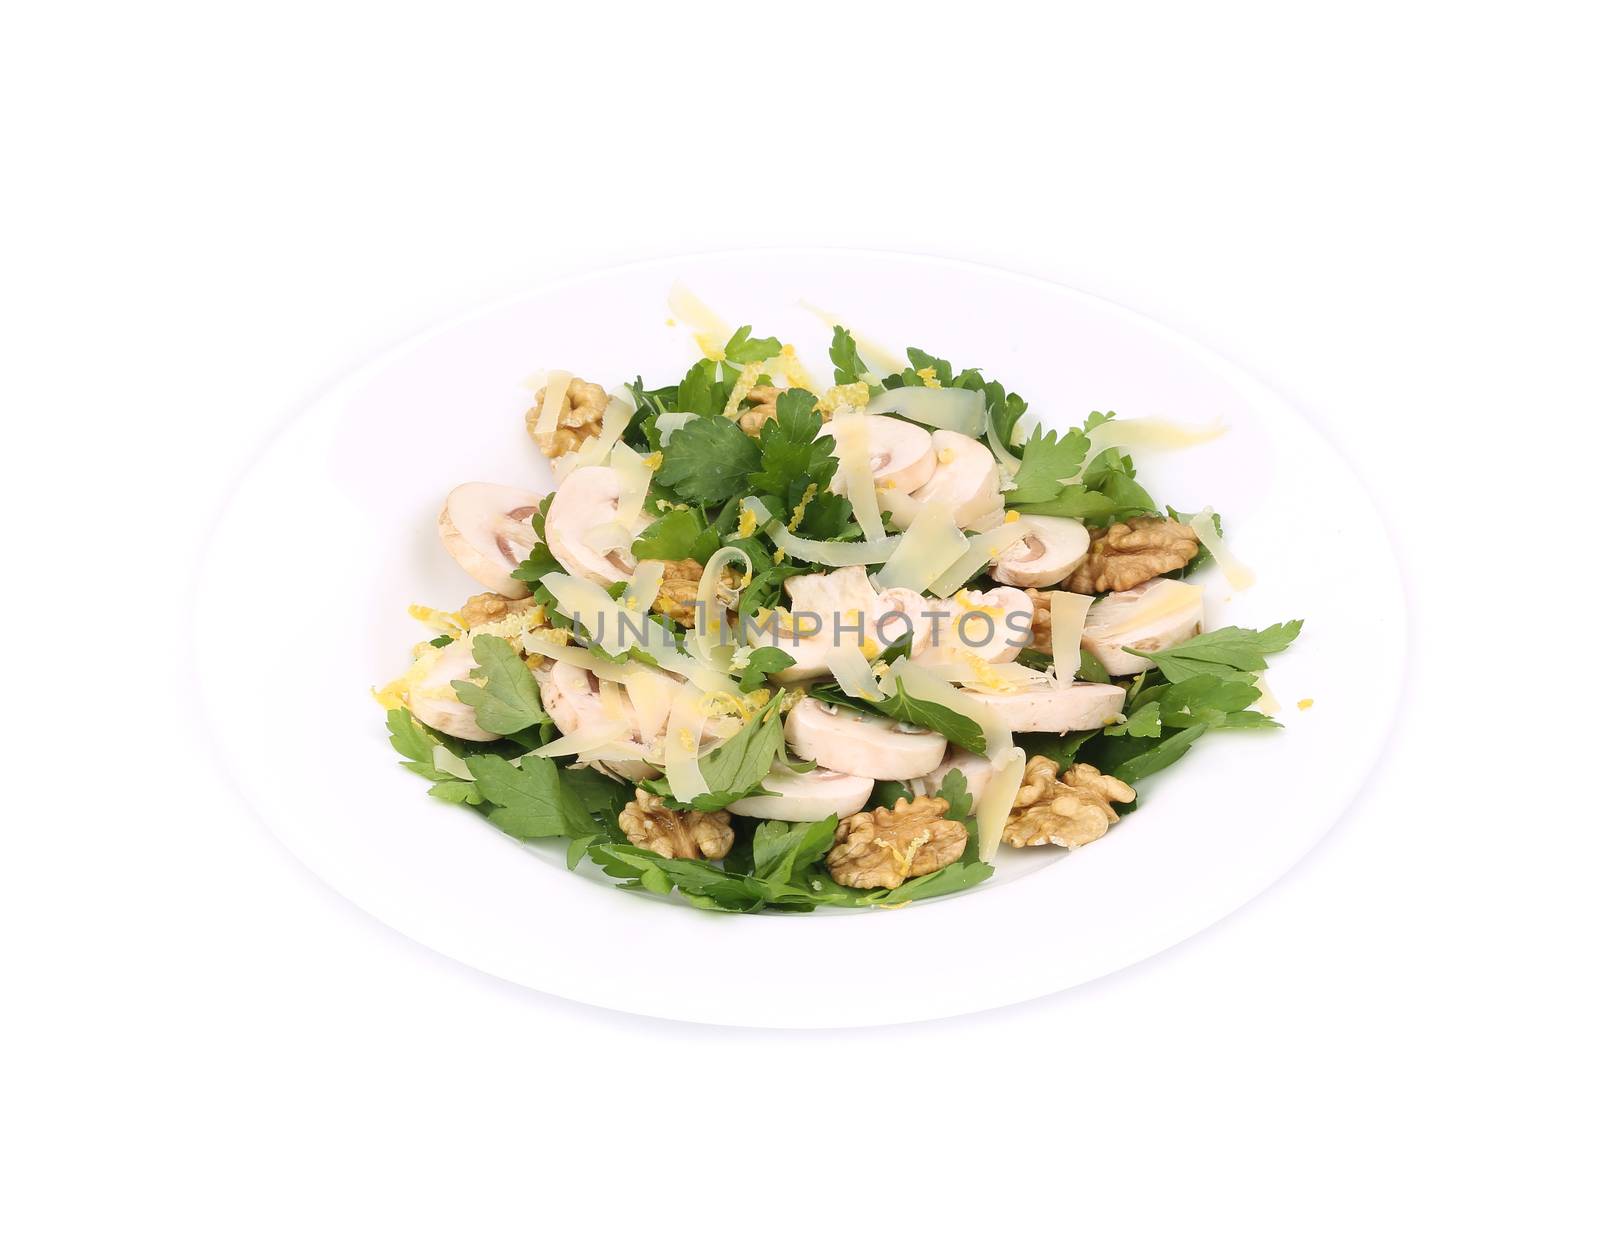 Mushroom salad with walnuts and parsley. by indigolotos